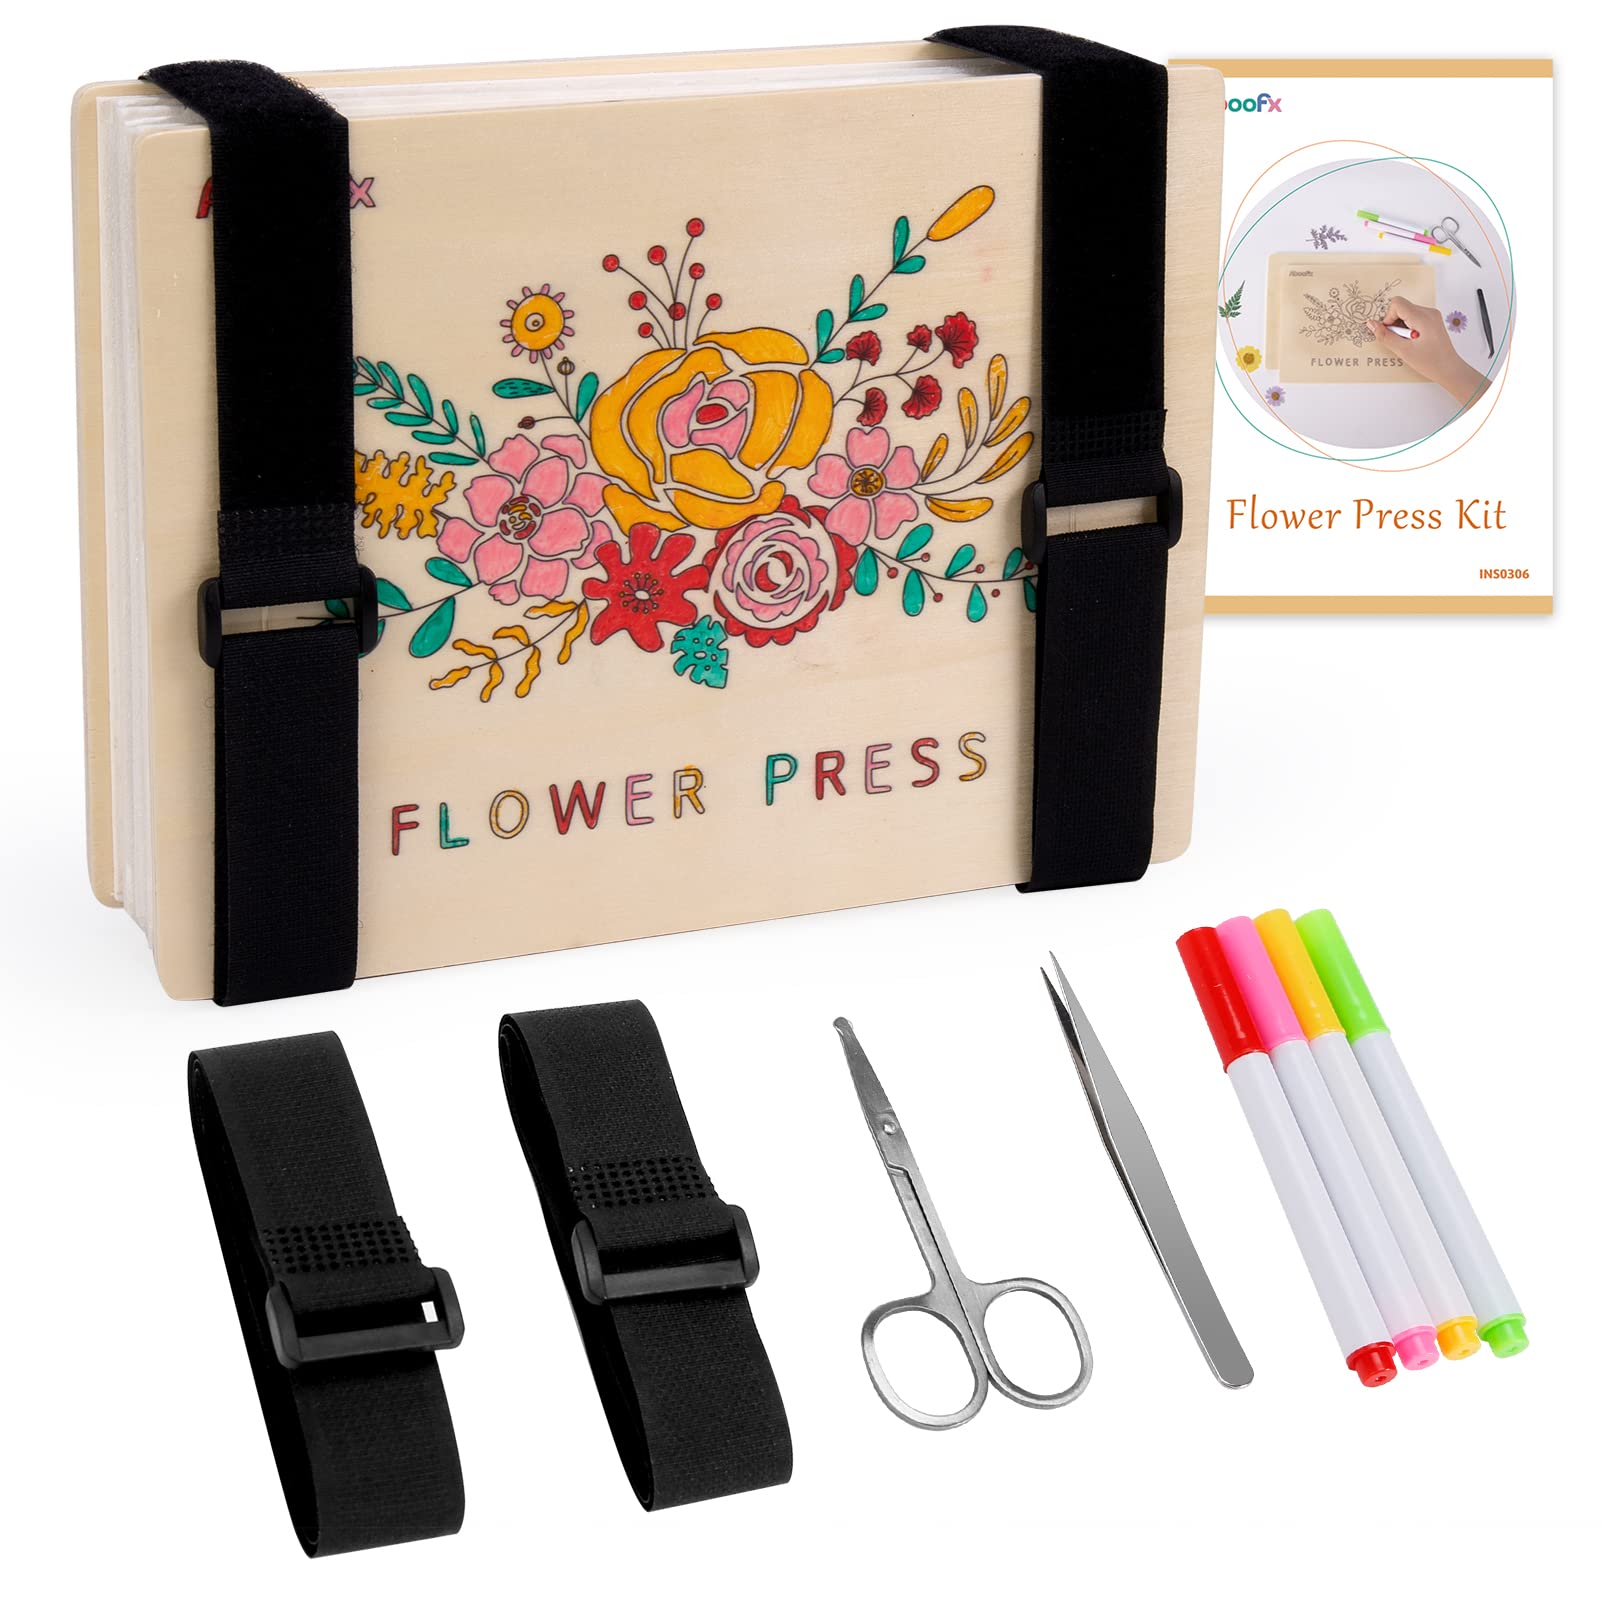  Aboofx Flower Press Kit, Large Wooden Flower Pressing Kit for  Adults Kids, 6 Layers 6.3 x 8.3 Inch Flower Press Leaf Pressing Kit to  Making Dried Plants, DIY Flower Preservation Kit Crafts